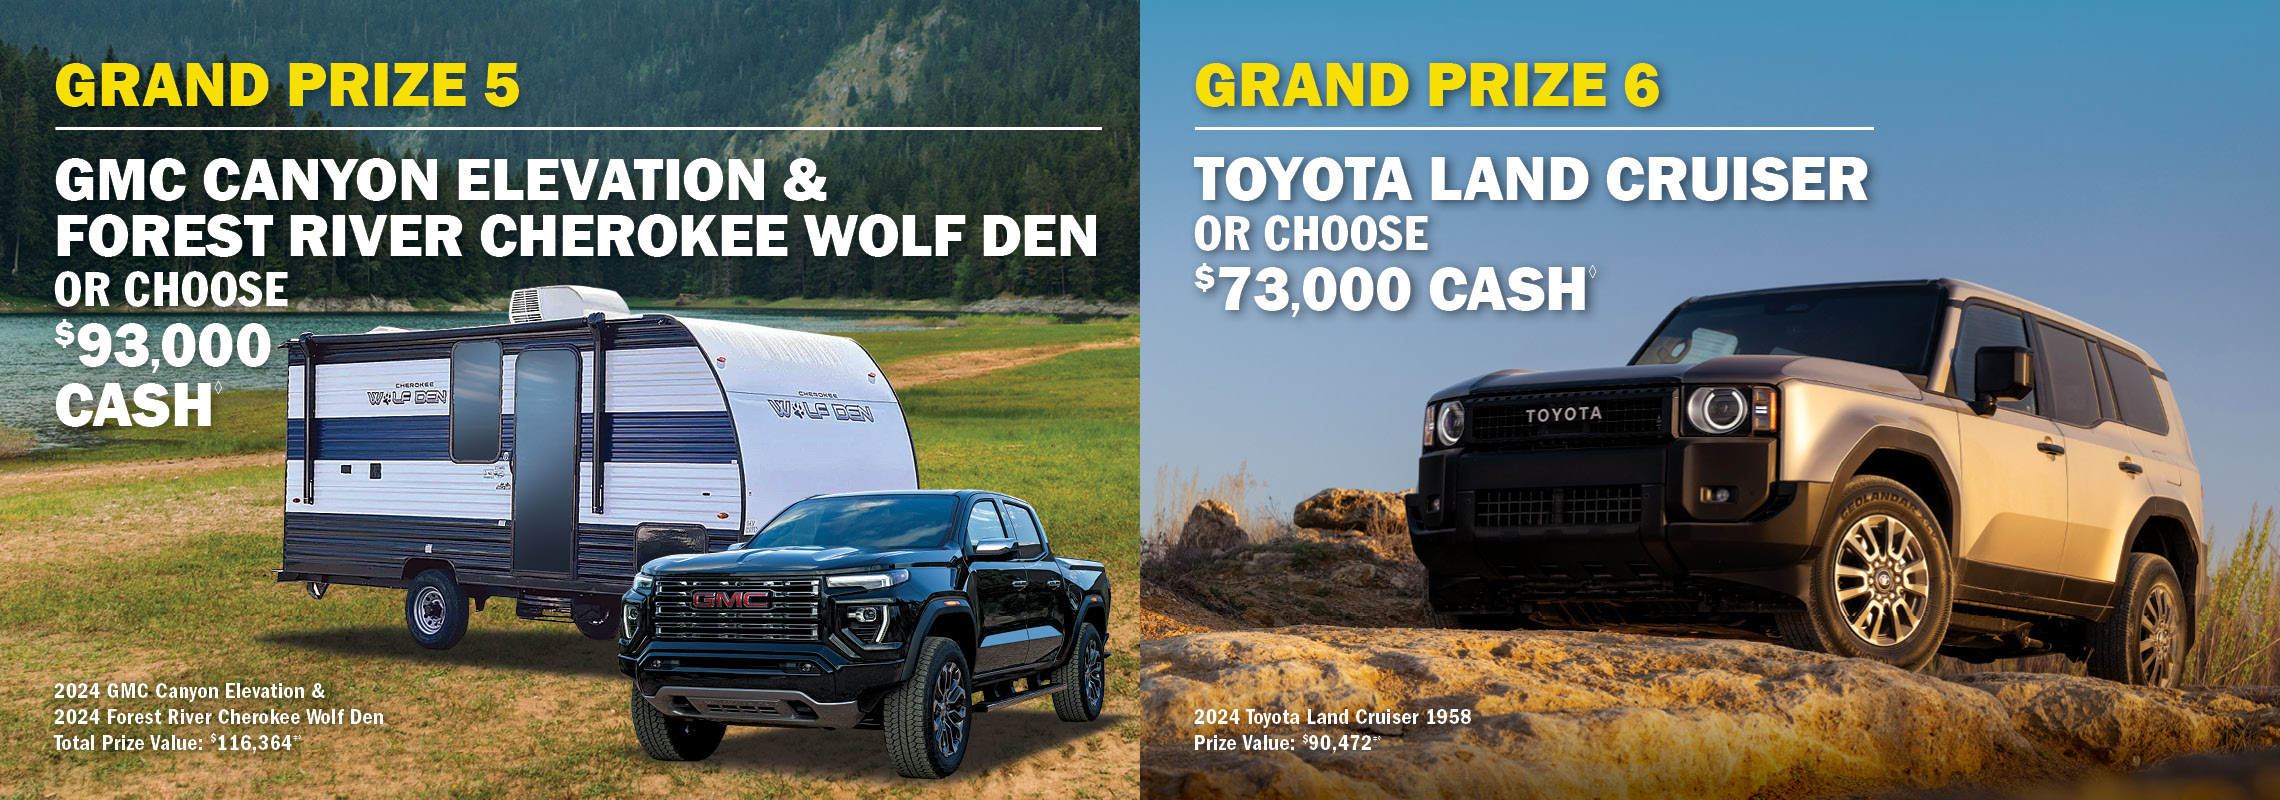 Grand Prize 5 - GMC Sierra & Prime Time Avenger or $90,000 cash. Grand Prize 6 - Bucket list adventure $100,000 cash.